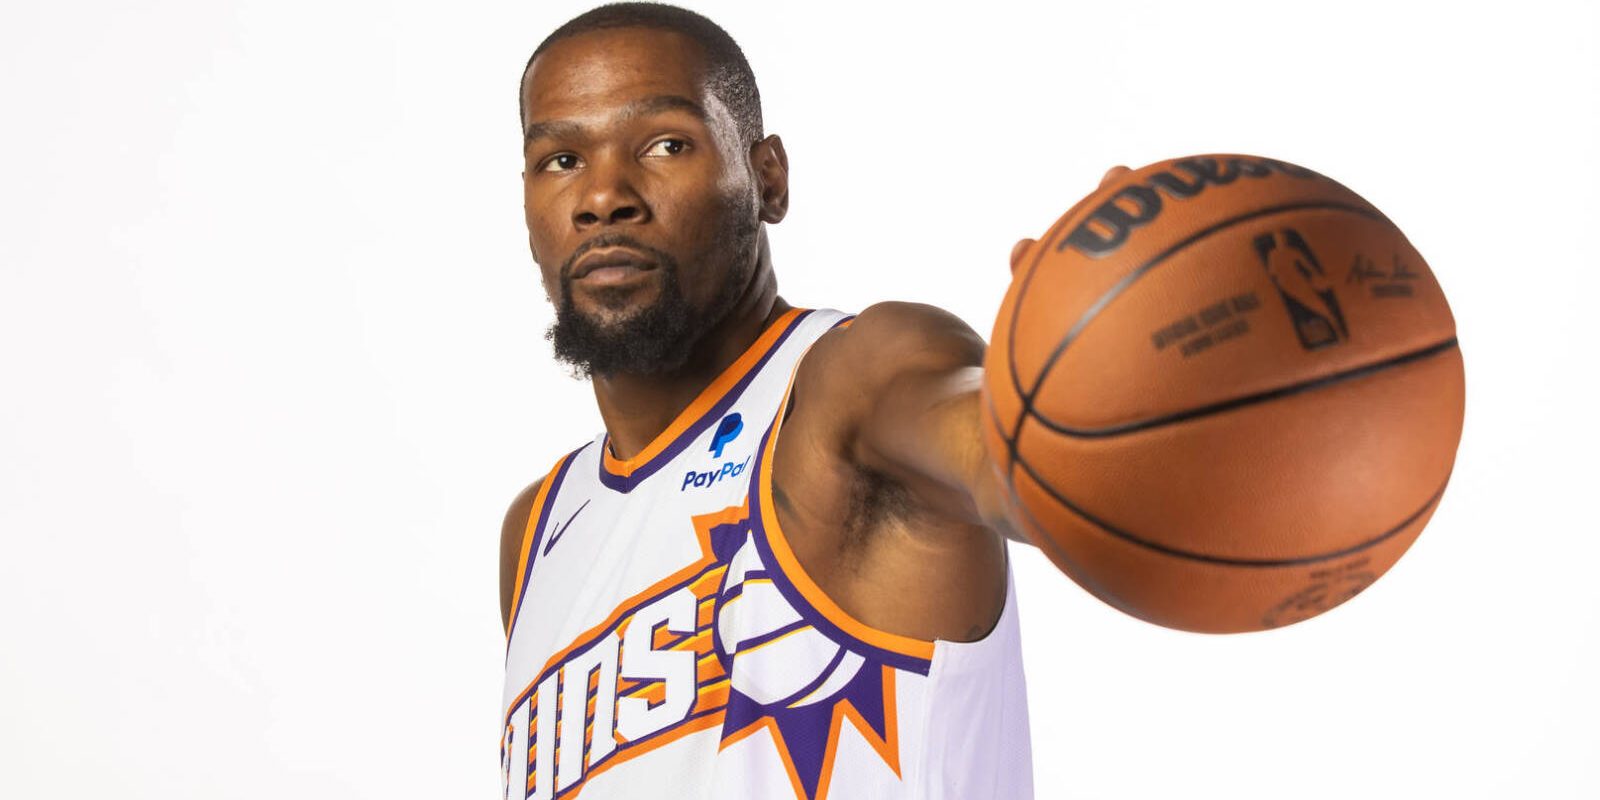 Oct 2, 2023; Phoenix, AZ, USA; Phoenix Suns forward Kevin Durant poses for a portrait during media day at Footprint Center. Mandatory Credit: Mark J. Rebilas-USA TODAY Sports